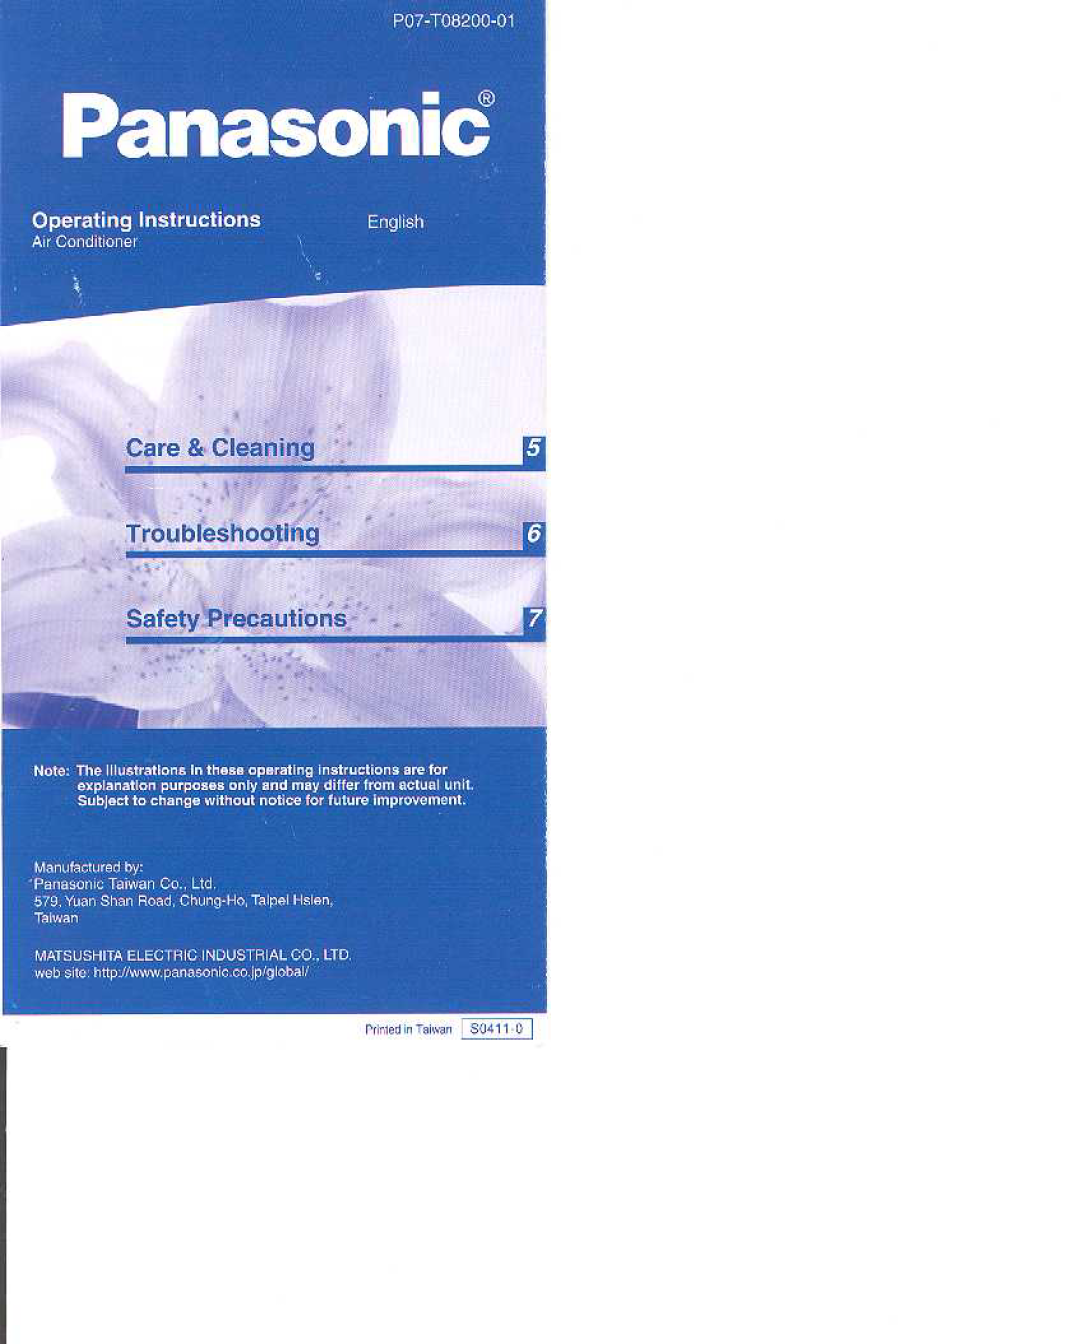 Panasonic CS-F24DD1ES manual 